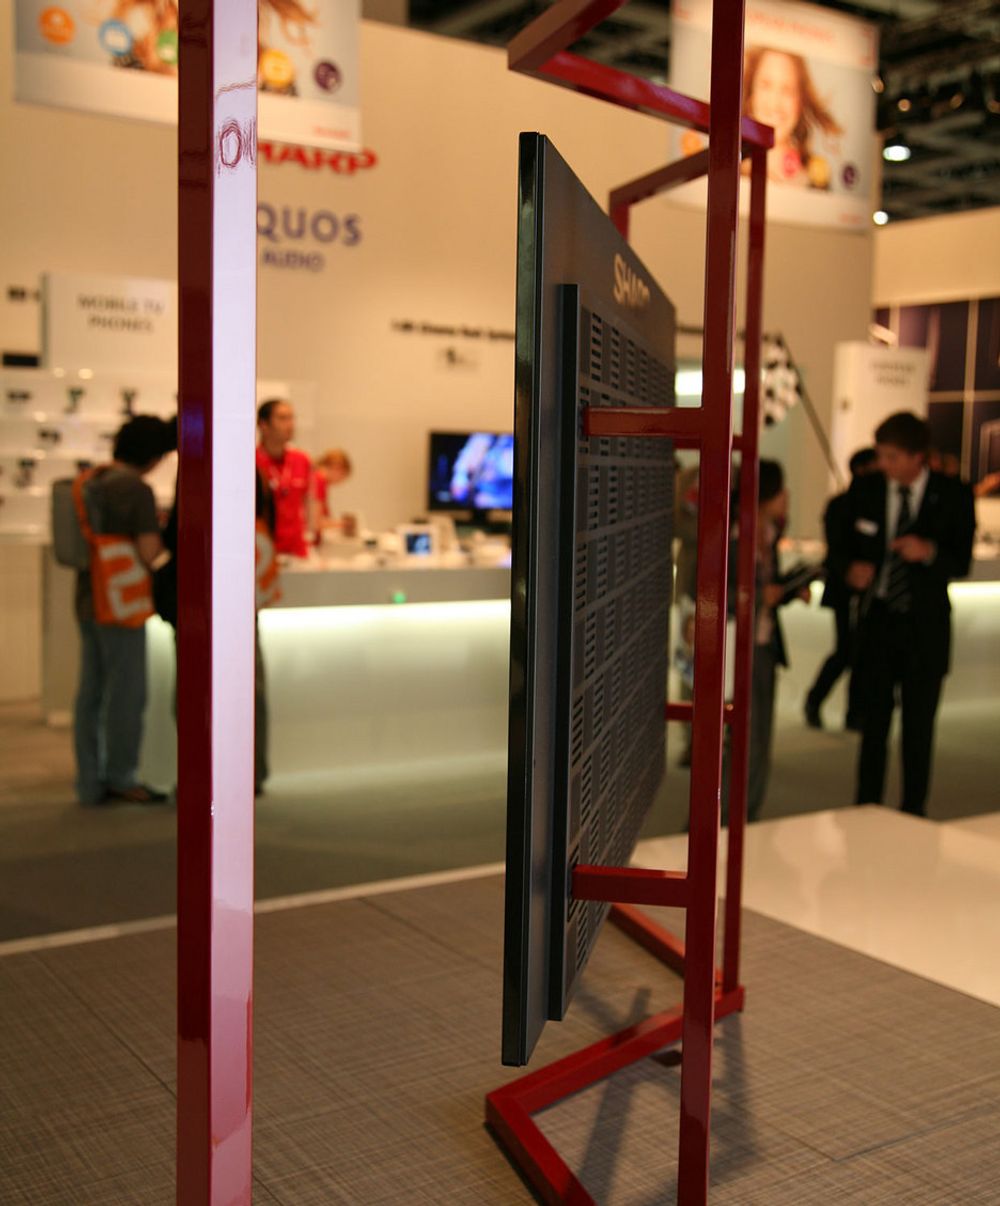 Sharps nye supertynne LCD-TV. Fra IFA-messa i Berlin.